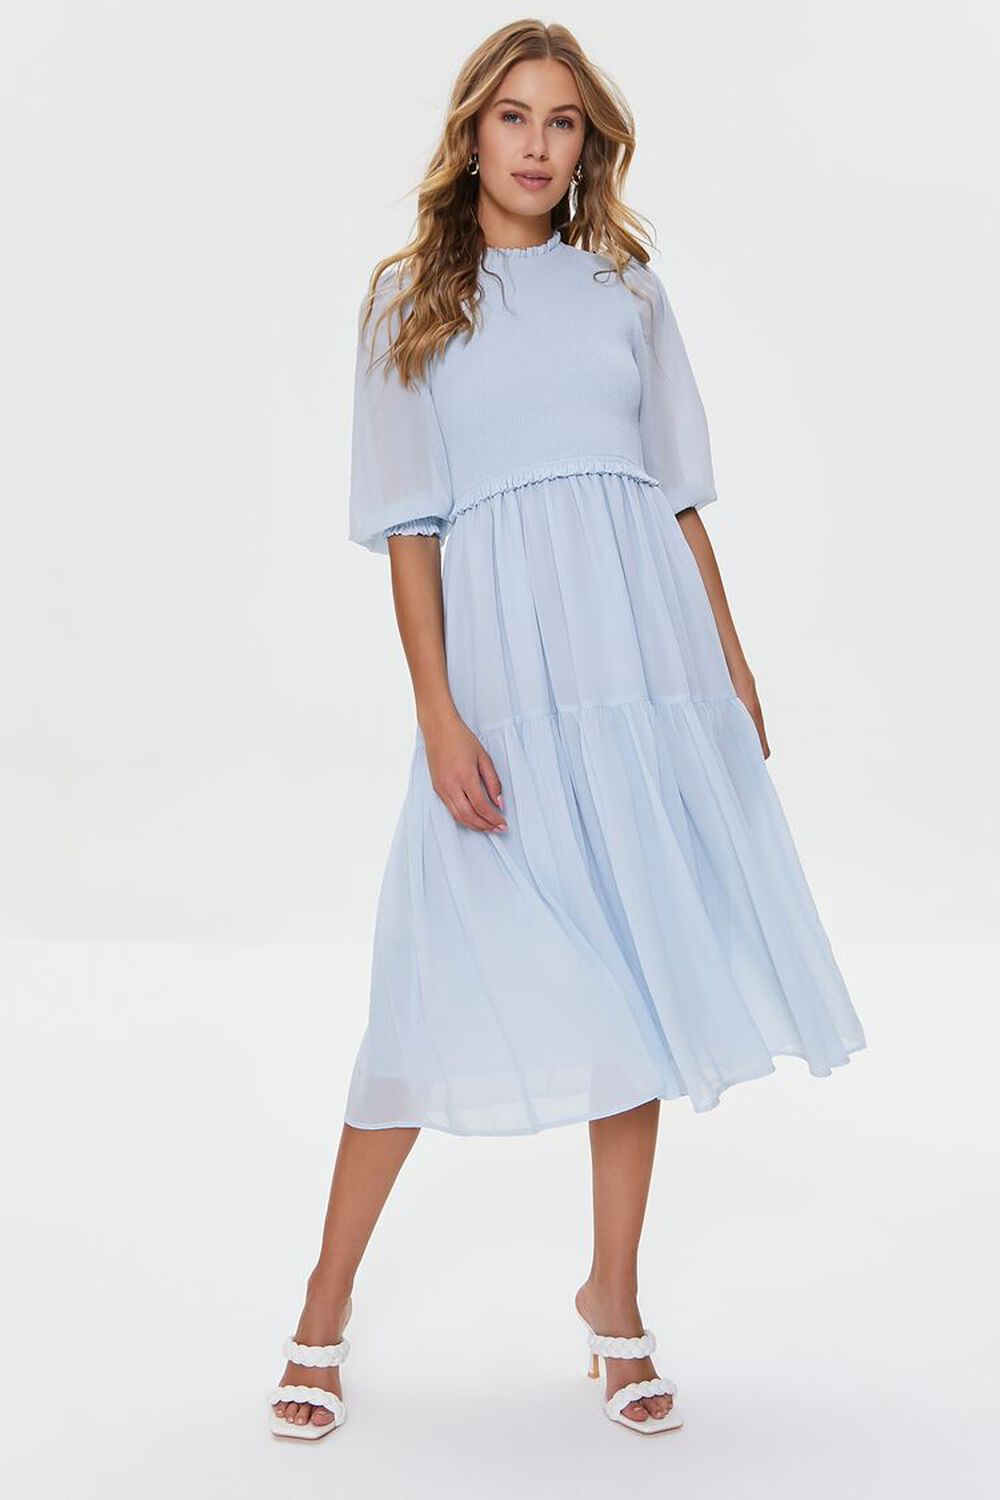 SKY BLUE Smocked Peasant-Sleeve Dress, image 1